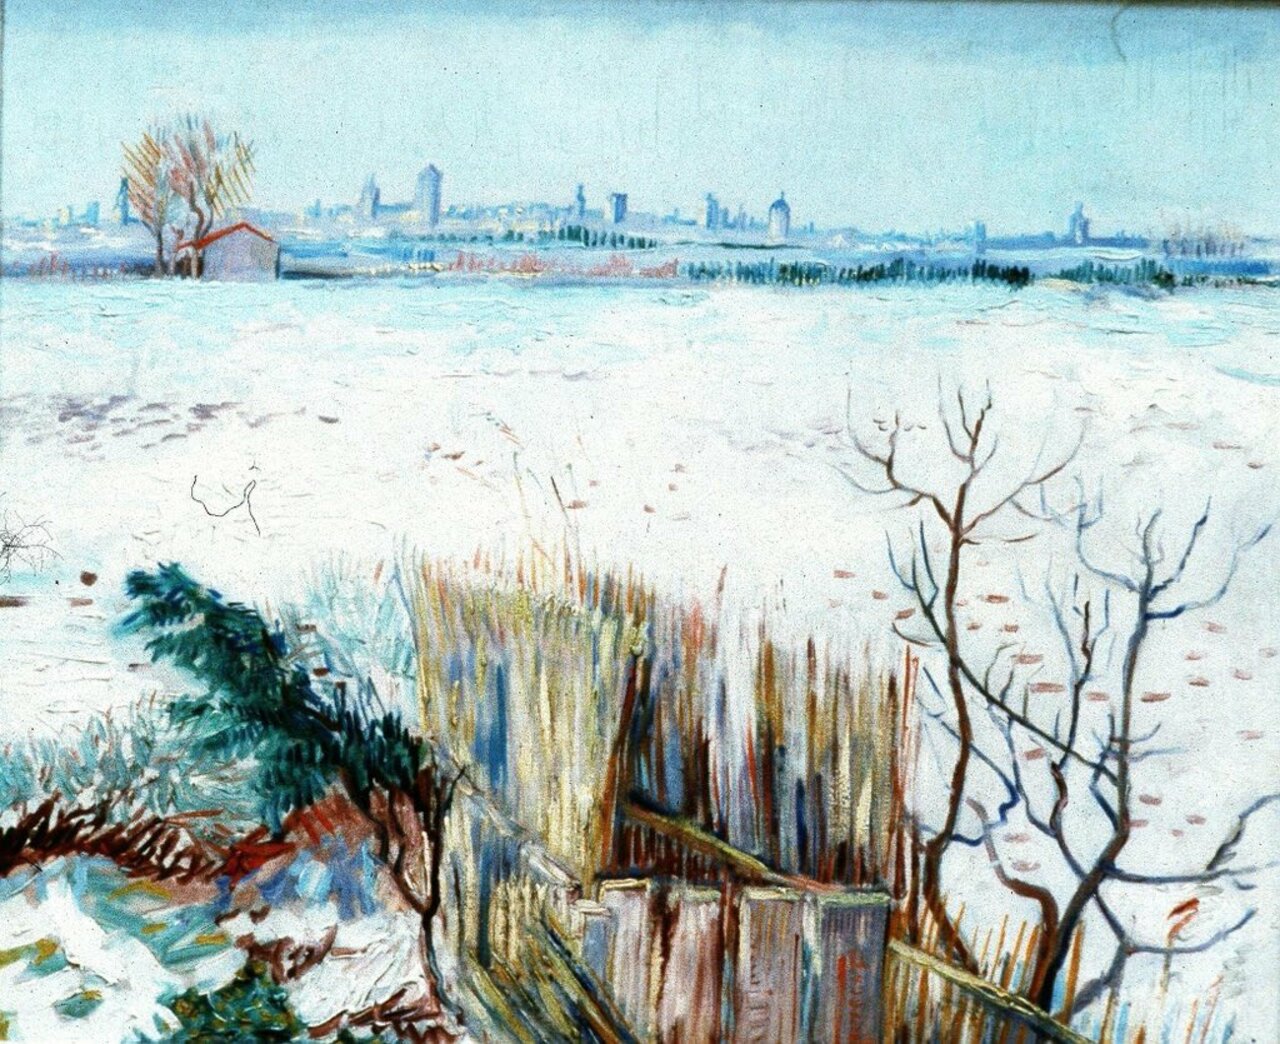 VAN GOGH, "SNOWY LANDSCAPE WITH ARLES IN THE BACKGROUND" 1888 #vangogh #gesture #art #artwit #twitart #artist #snow https://t.co/4nOMKiLK3D